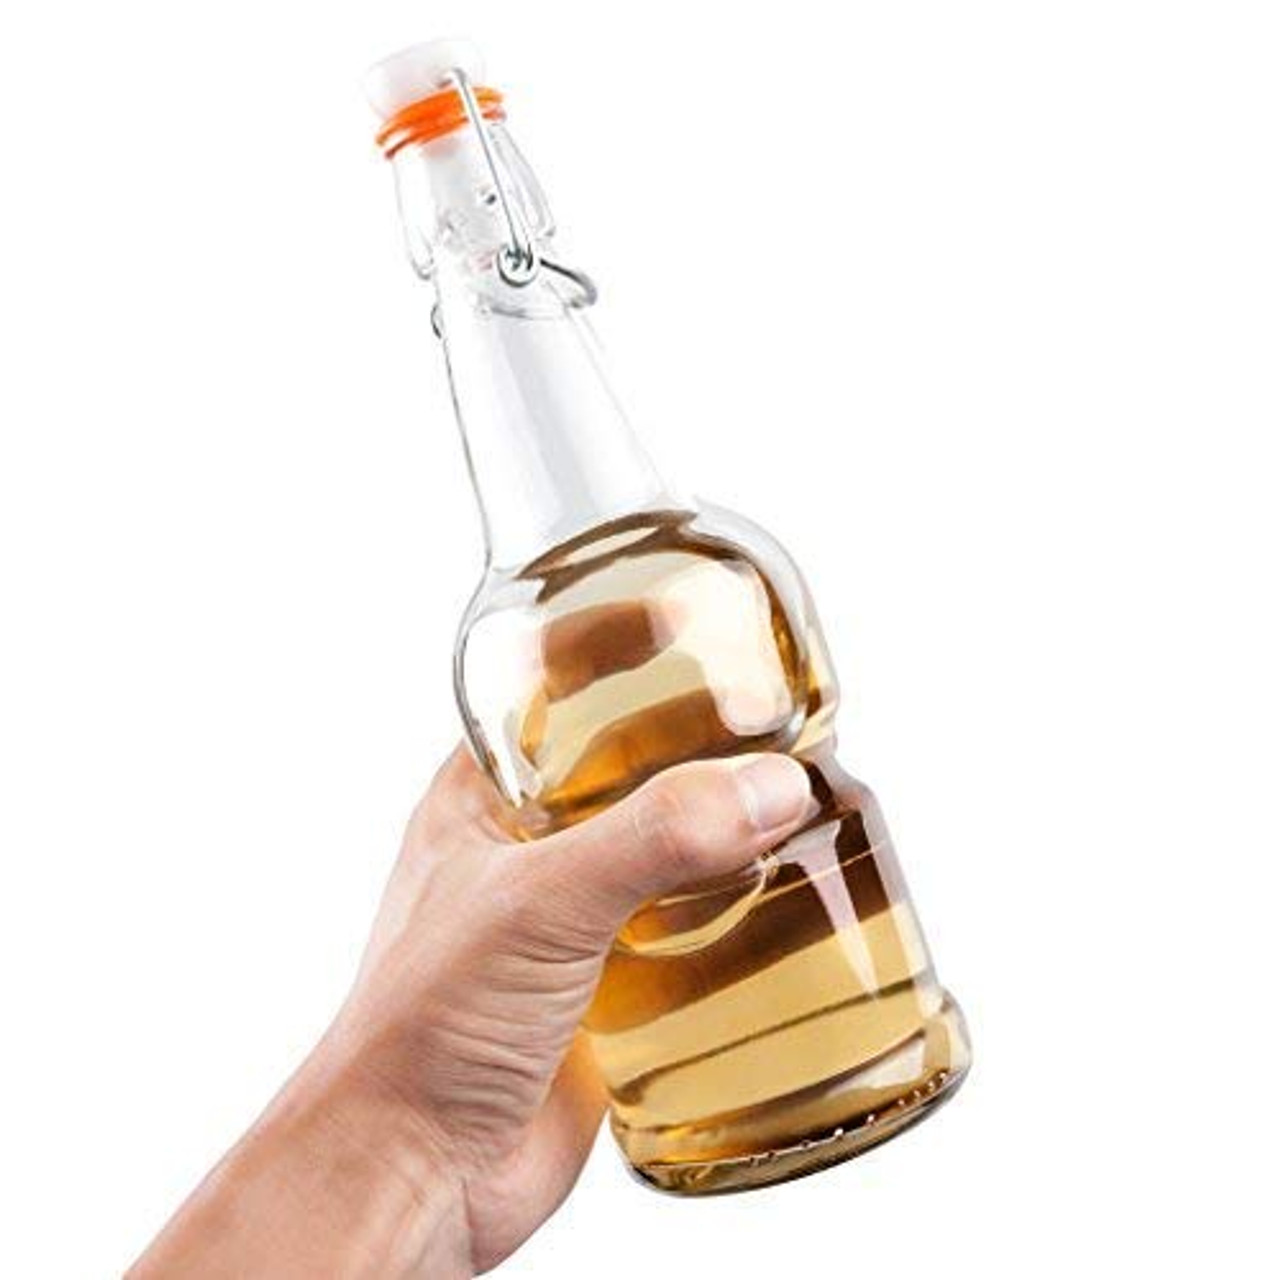 Clear Glass Bottle 6 Pack 12 oz (375 ml) with Cap Hot Sauce Oil Jam for  Beverages Oils Kombucha Kefir Vinegar Beer Airtight Caps and Leak Proof  Lids